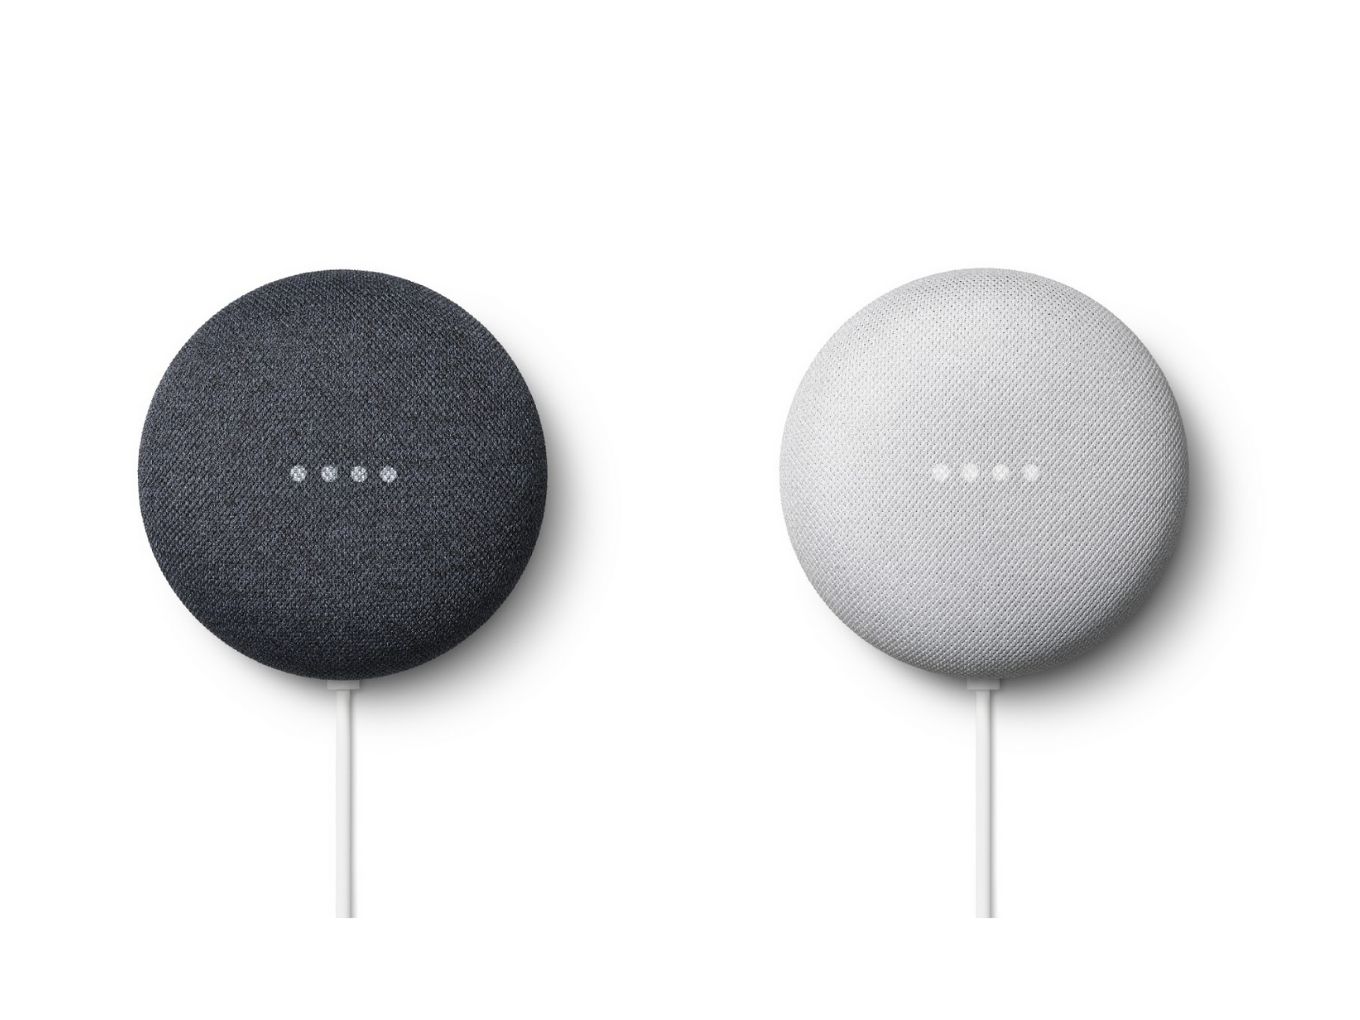 Google Launches Nest Mini: Price, Features & More